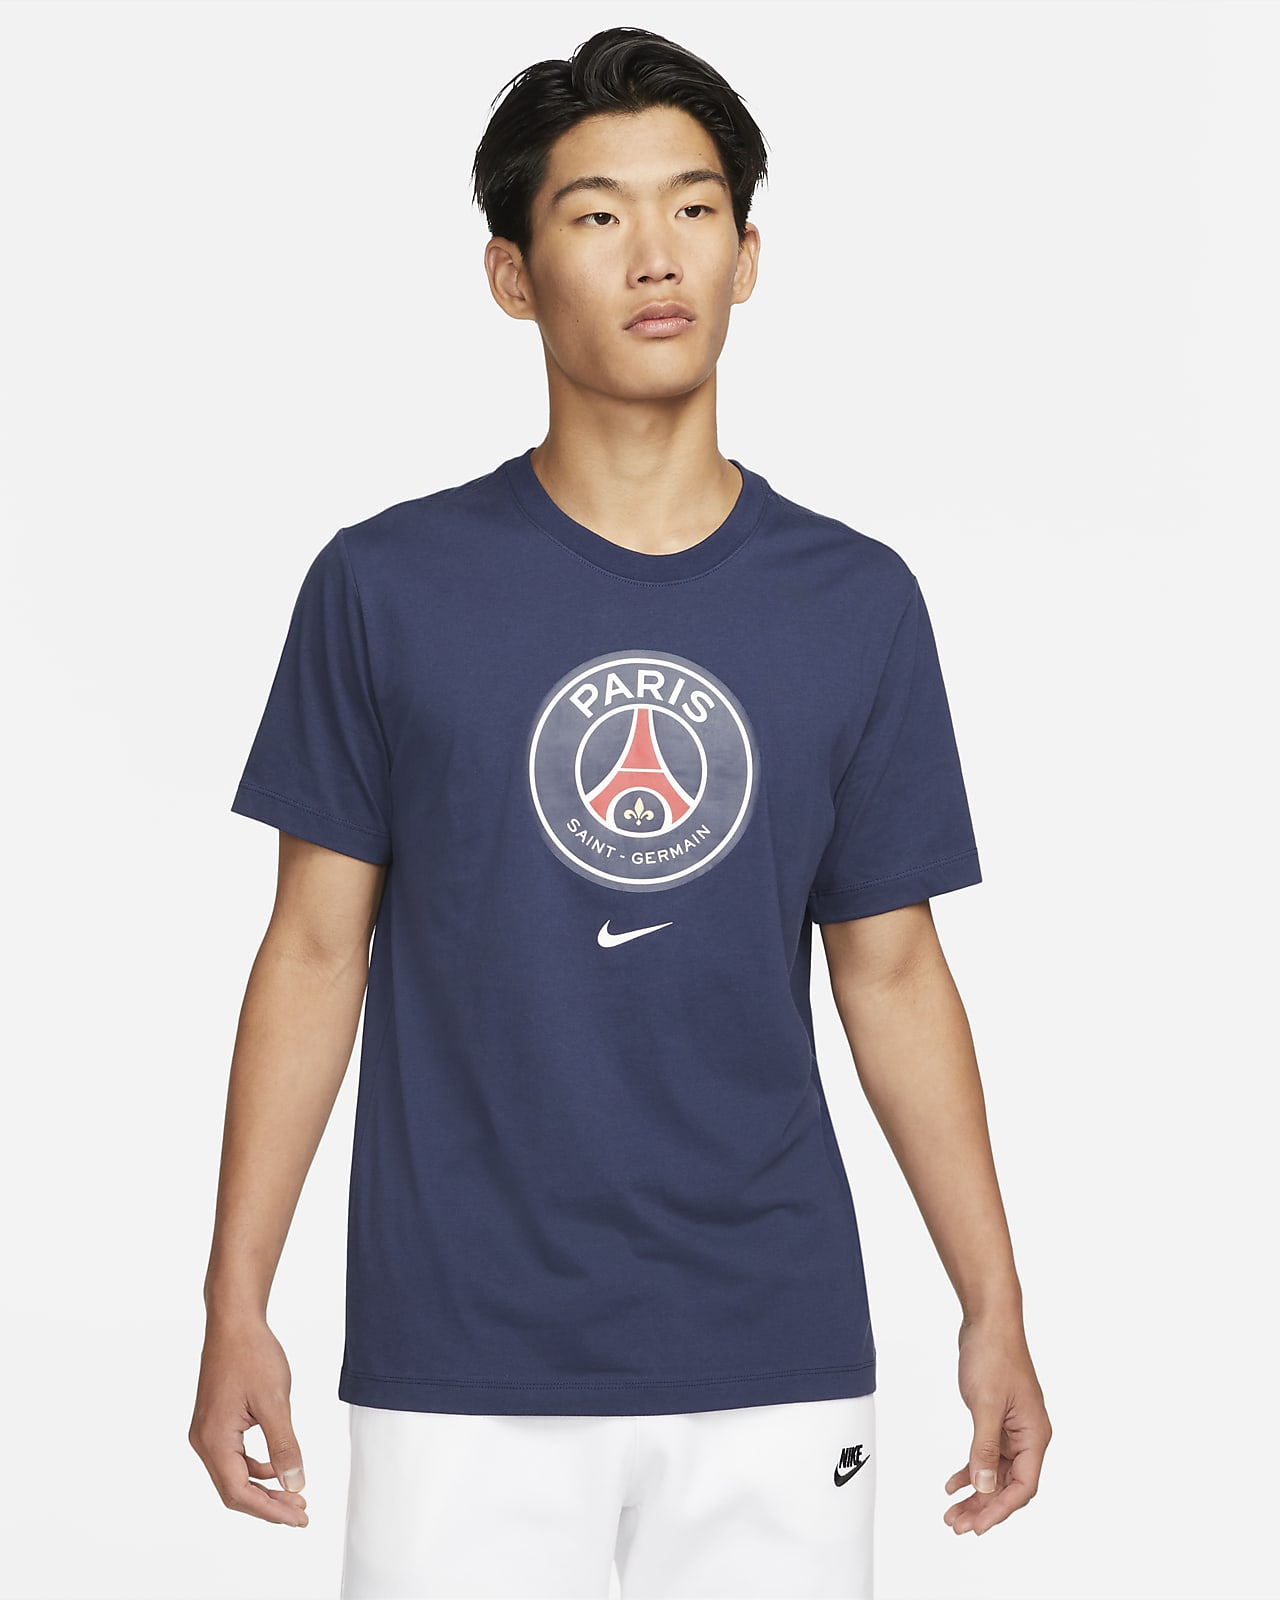 Paris Saint-Germain Crest Men's Football T-Shirt